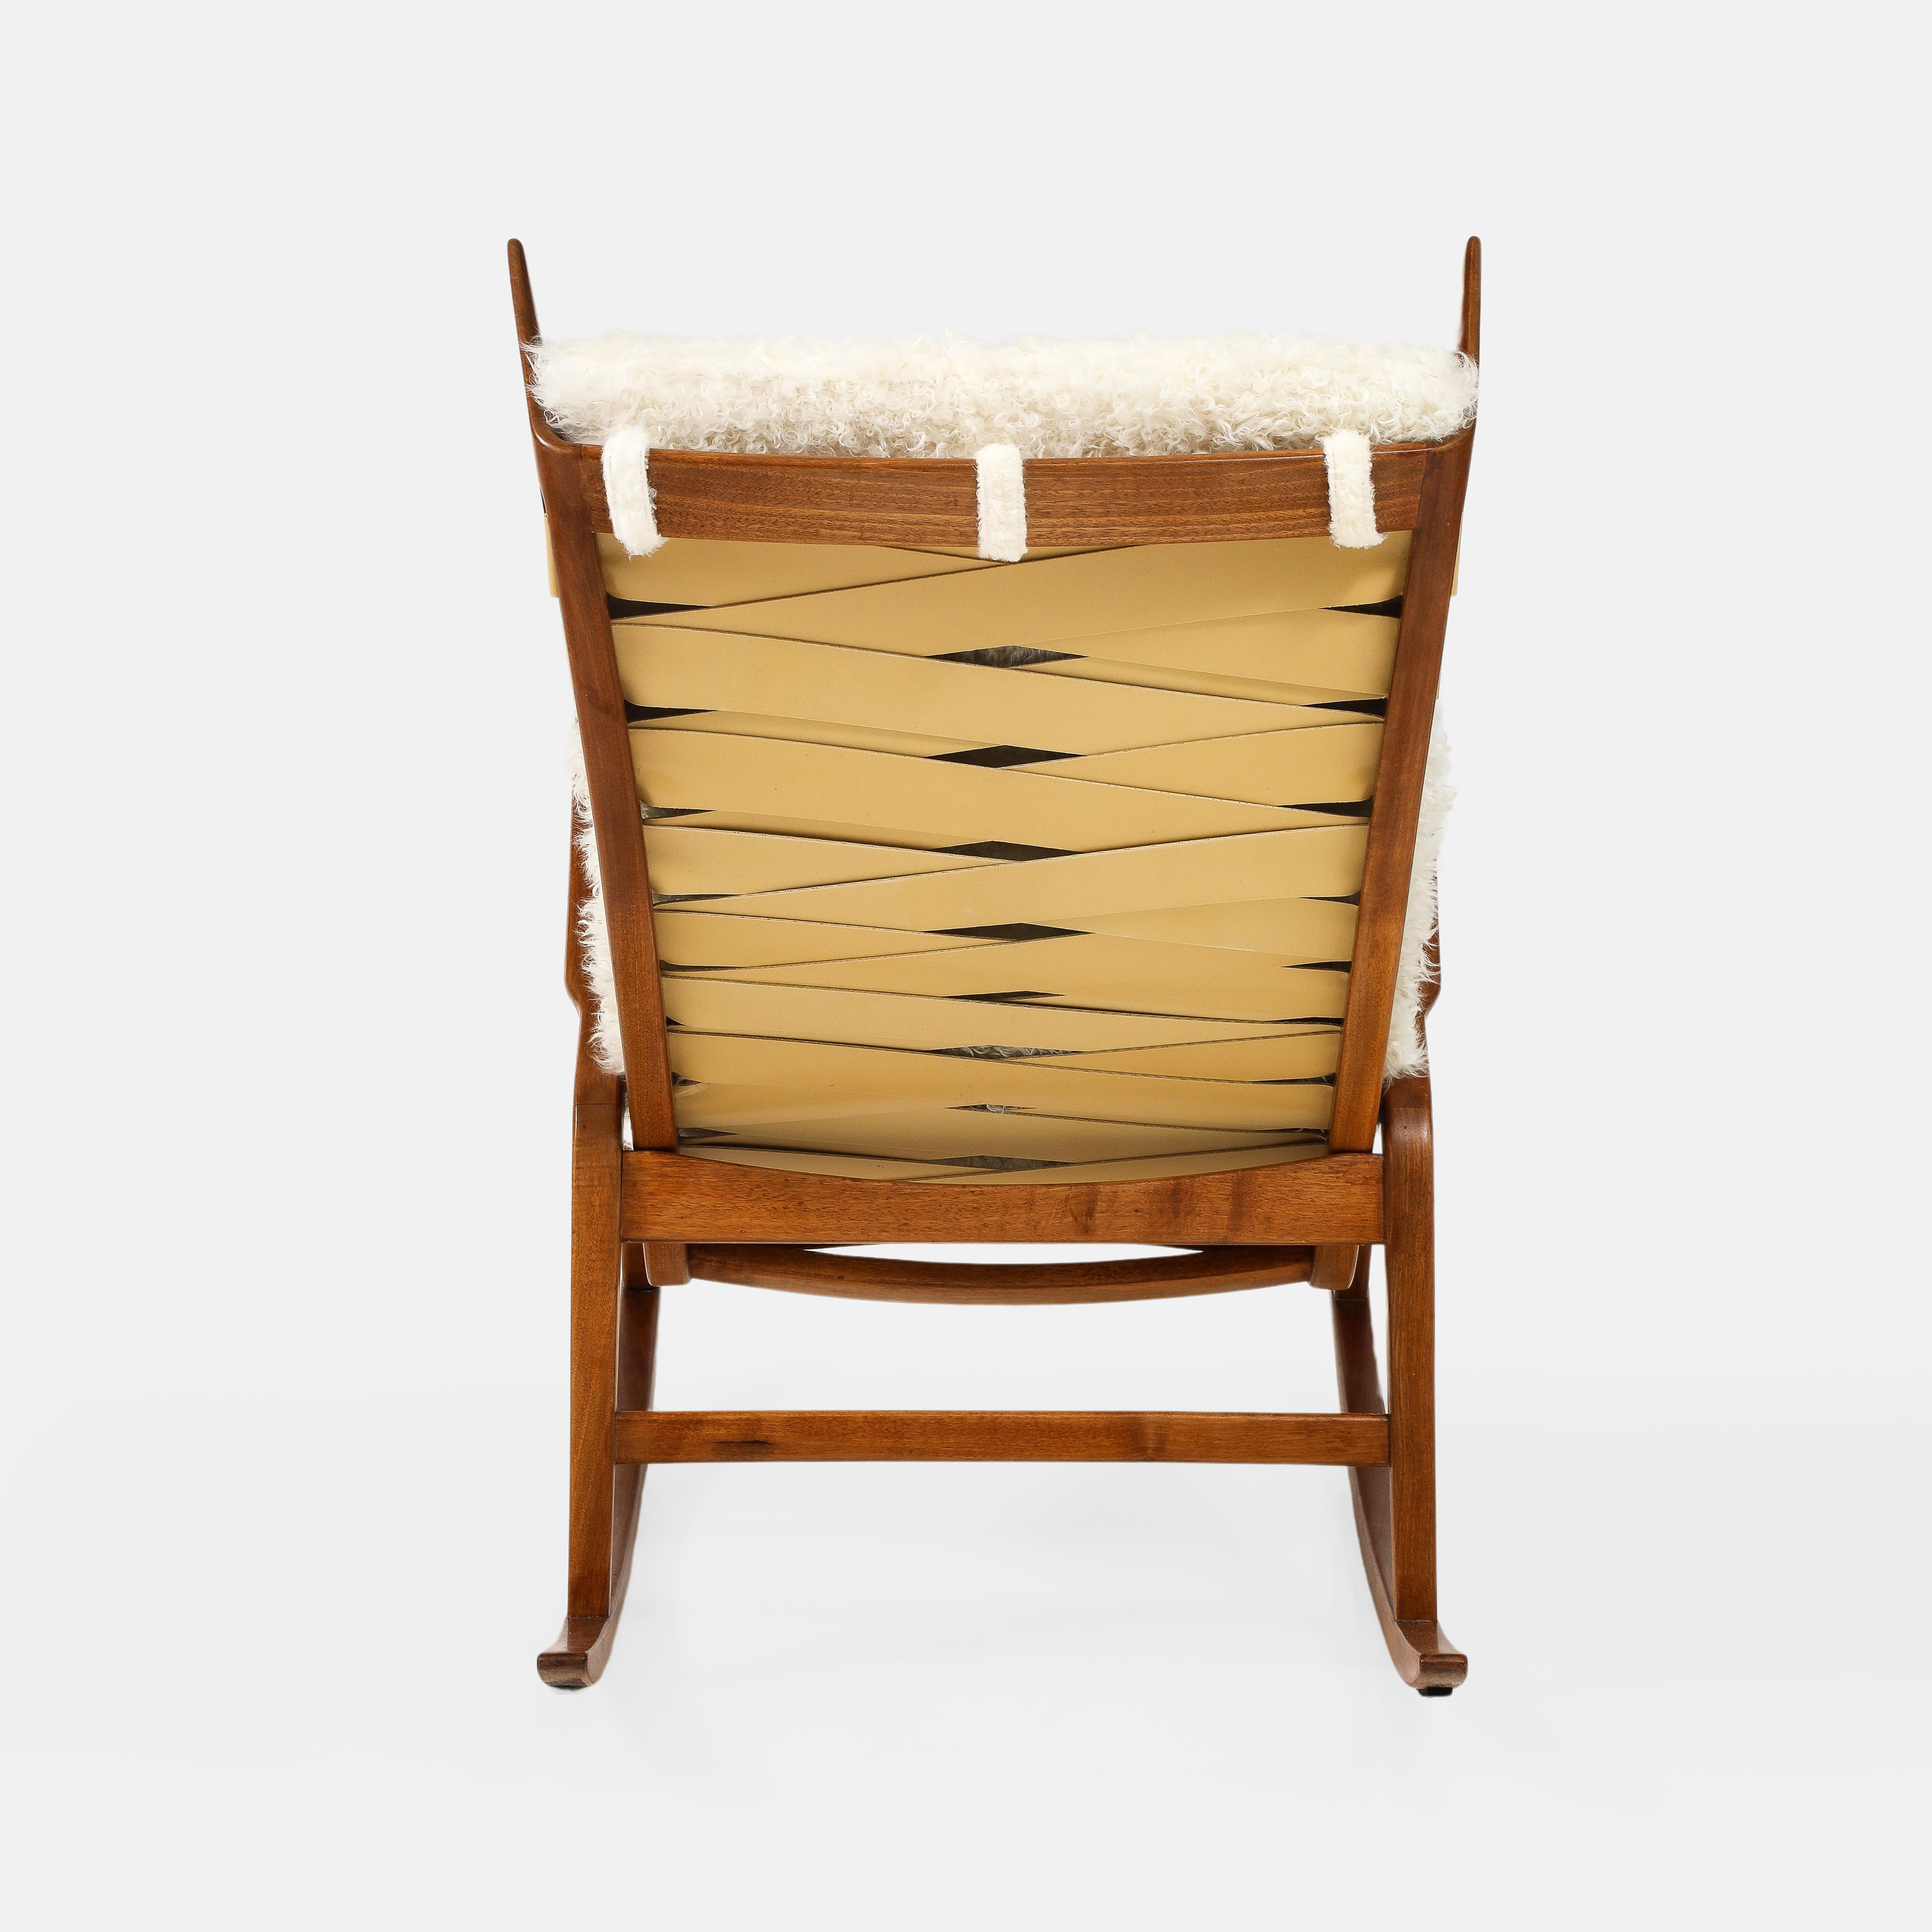 Cassina Walnut Rocking Lounge Chairs Model 572 in Ivory Kalgan Lambskin, 1950s For Sale 5